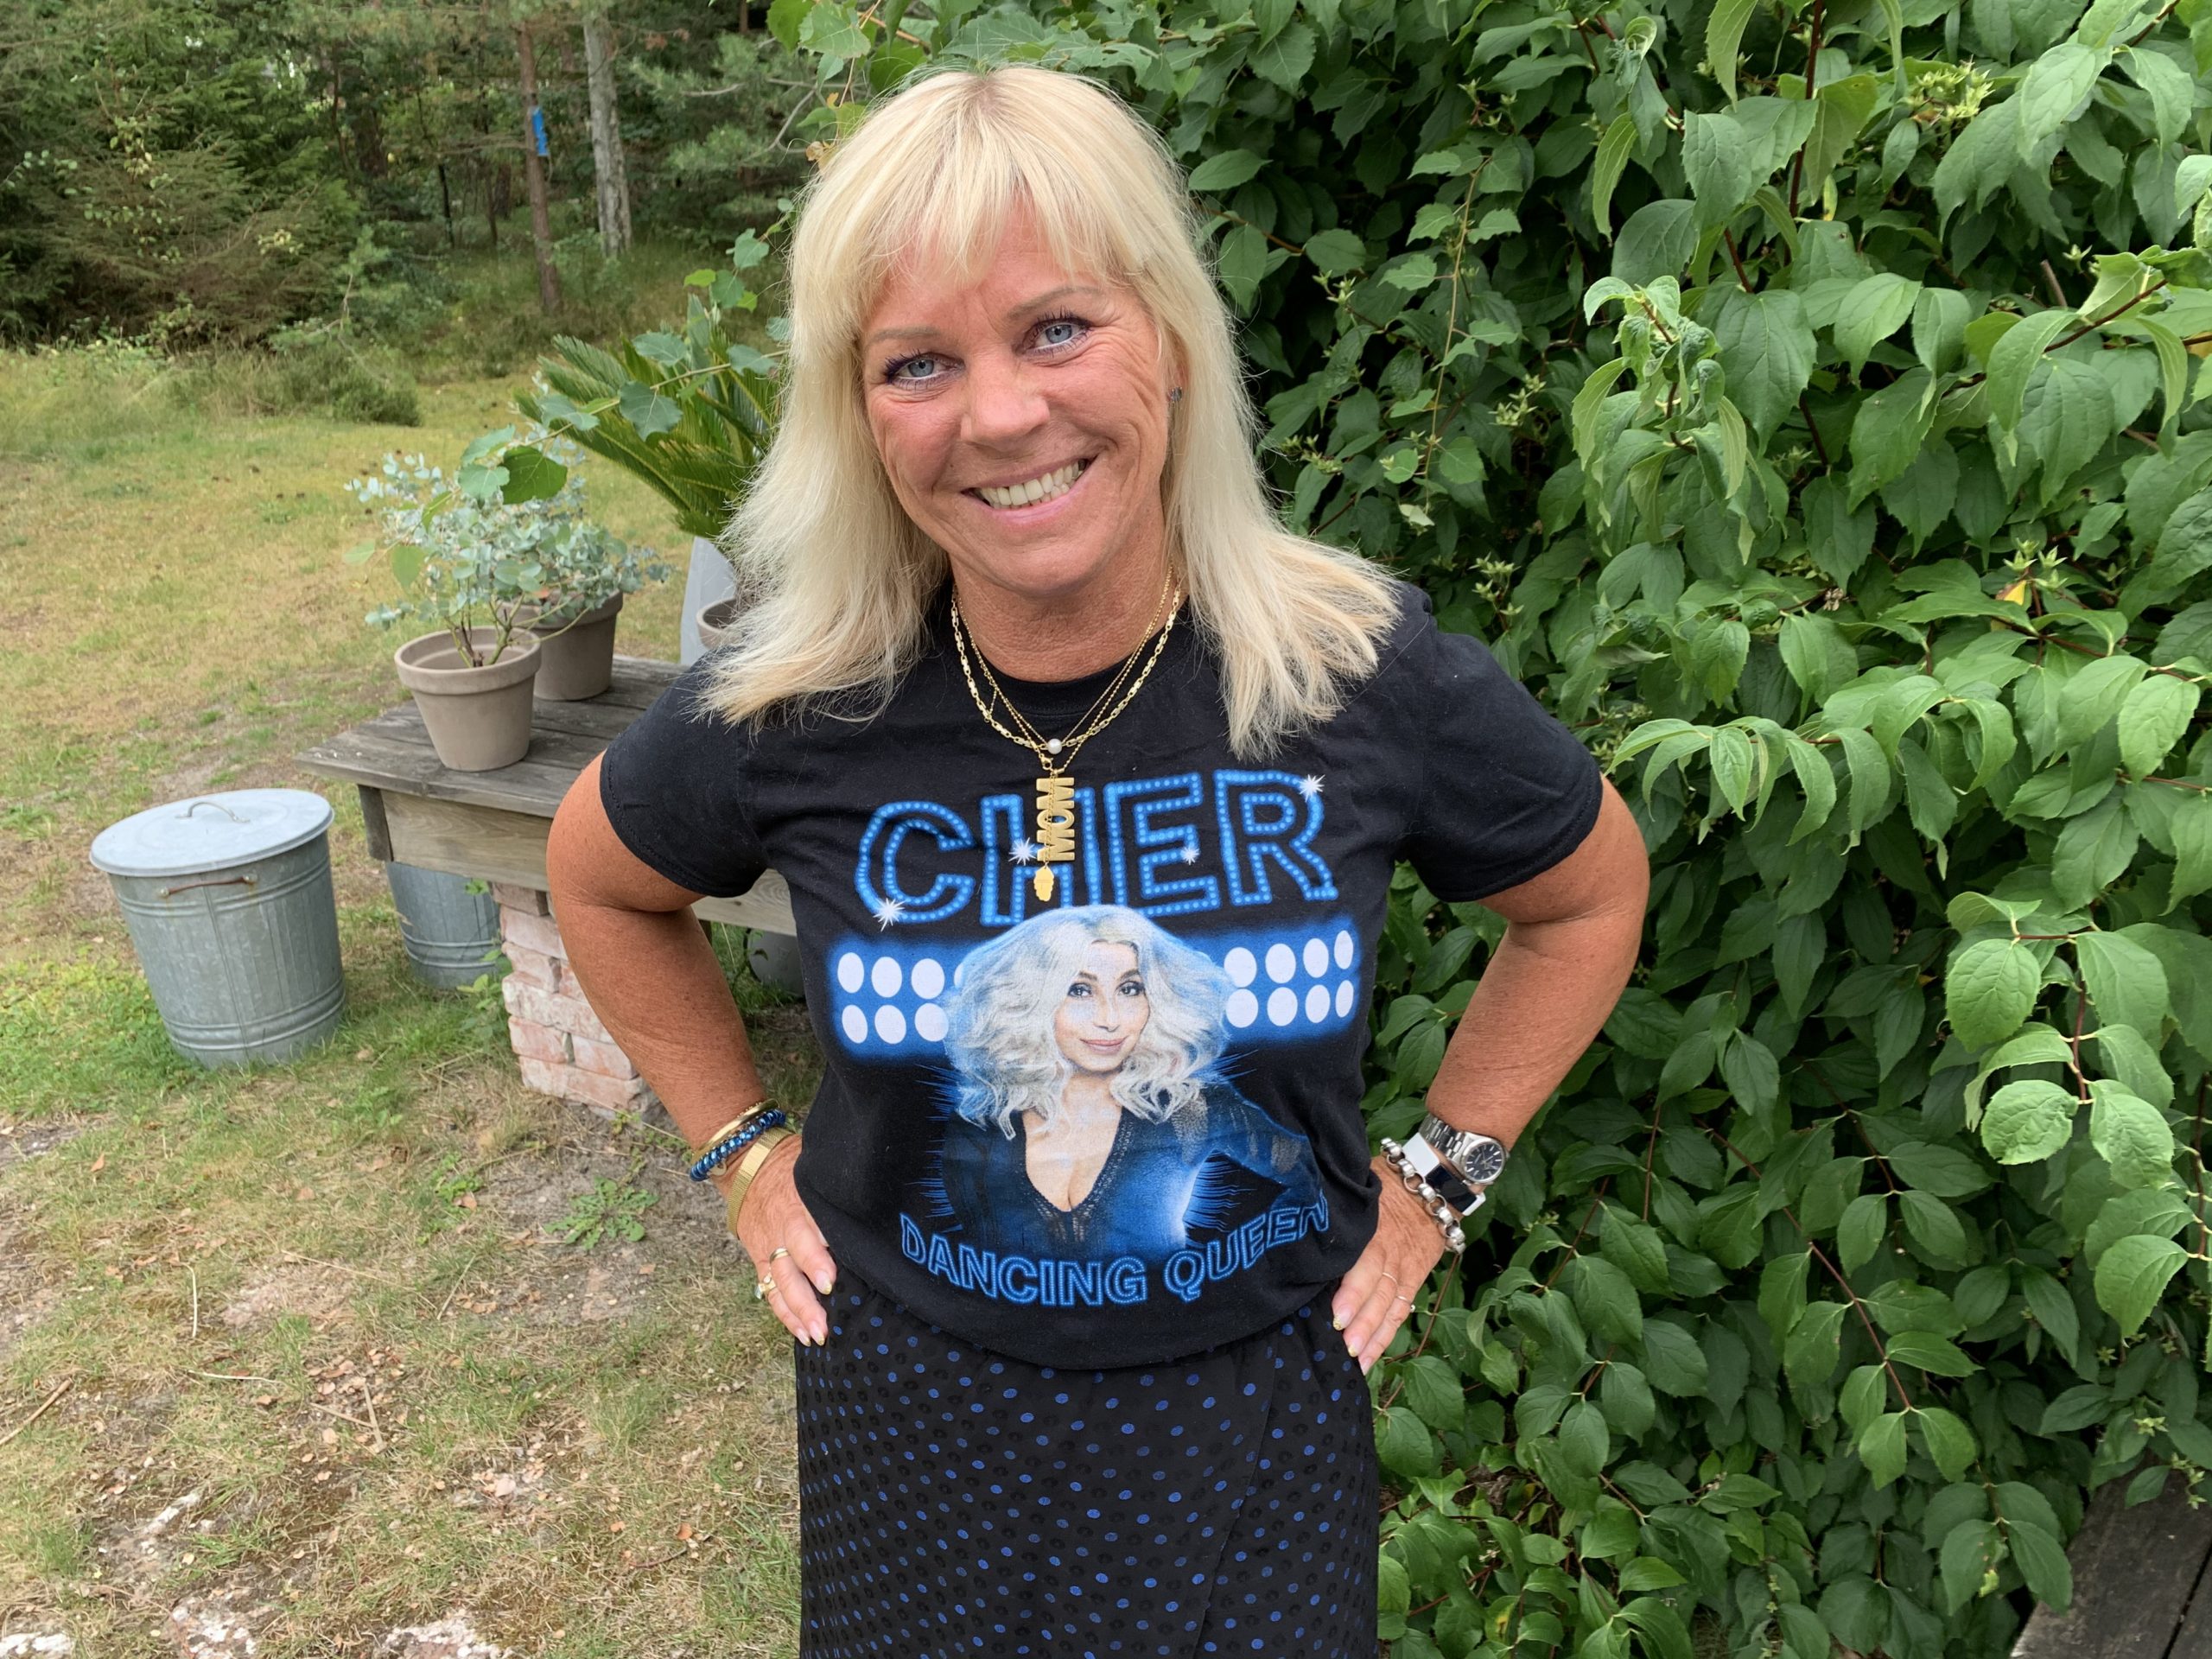 Min snygga Cher t-shirt